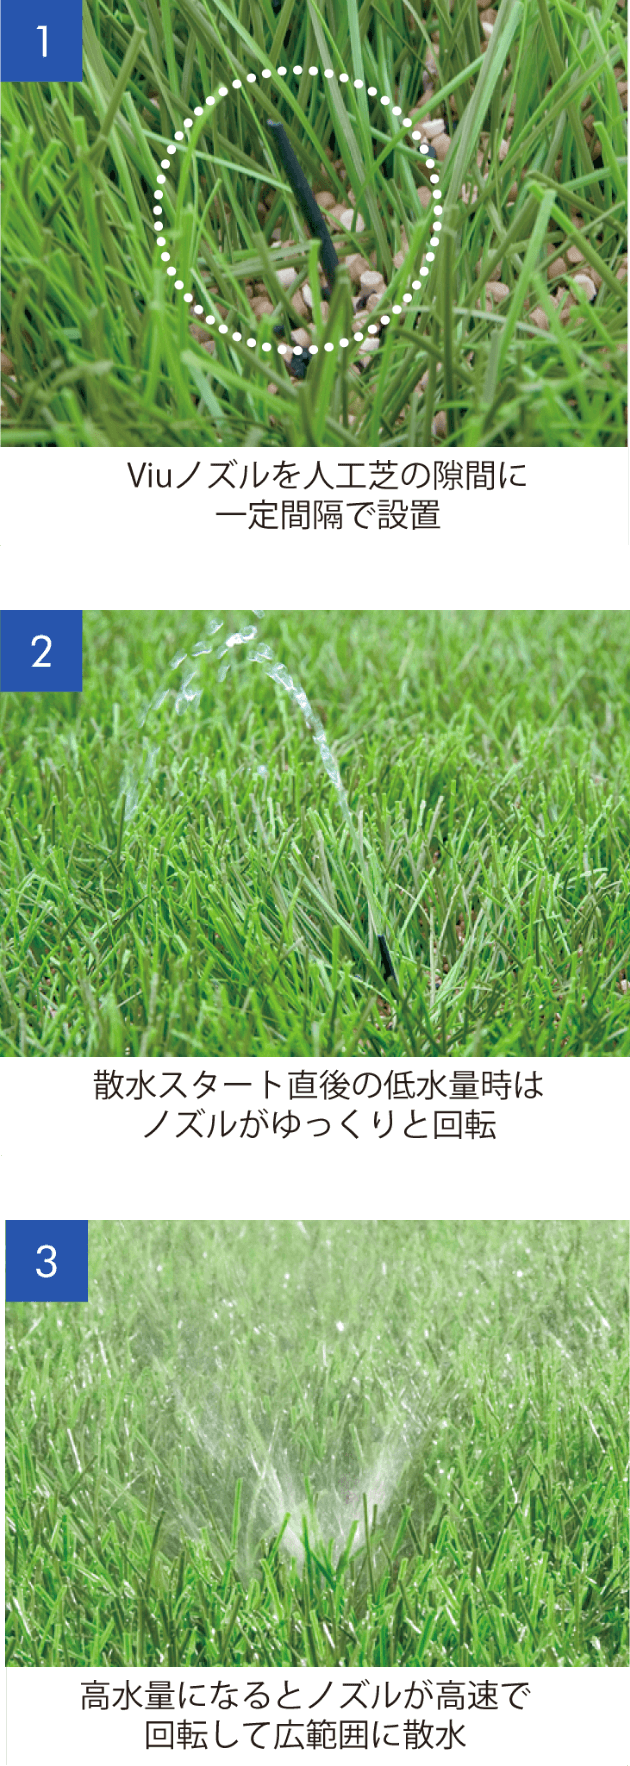 1Viuノズルを人工芝の隙間に一定間隔で設置 2散水スタート直後の低水量時はノズルがゆっくりと回転 3高水量になるとノズルが高速で回転して広範囲に散水